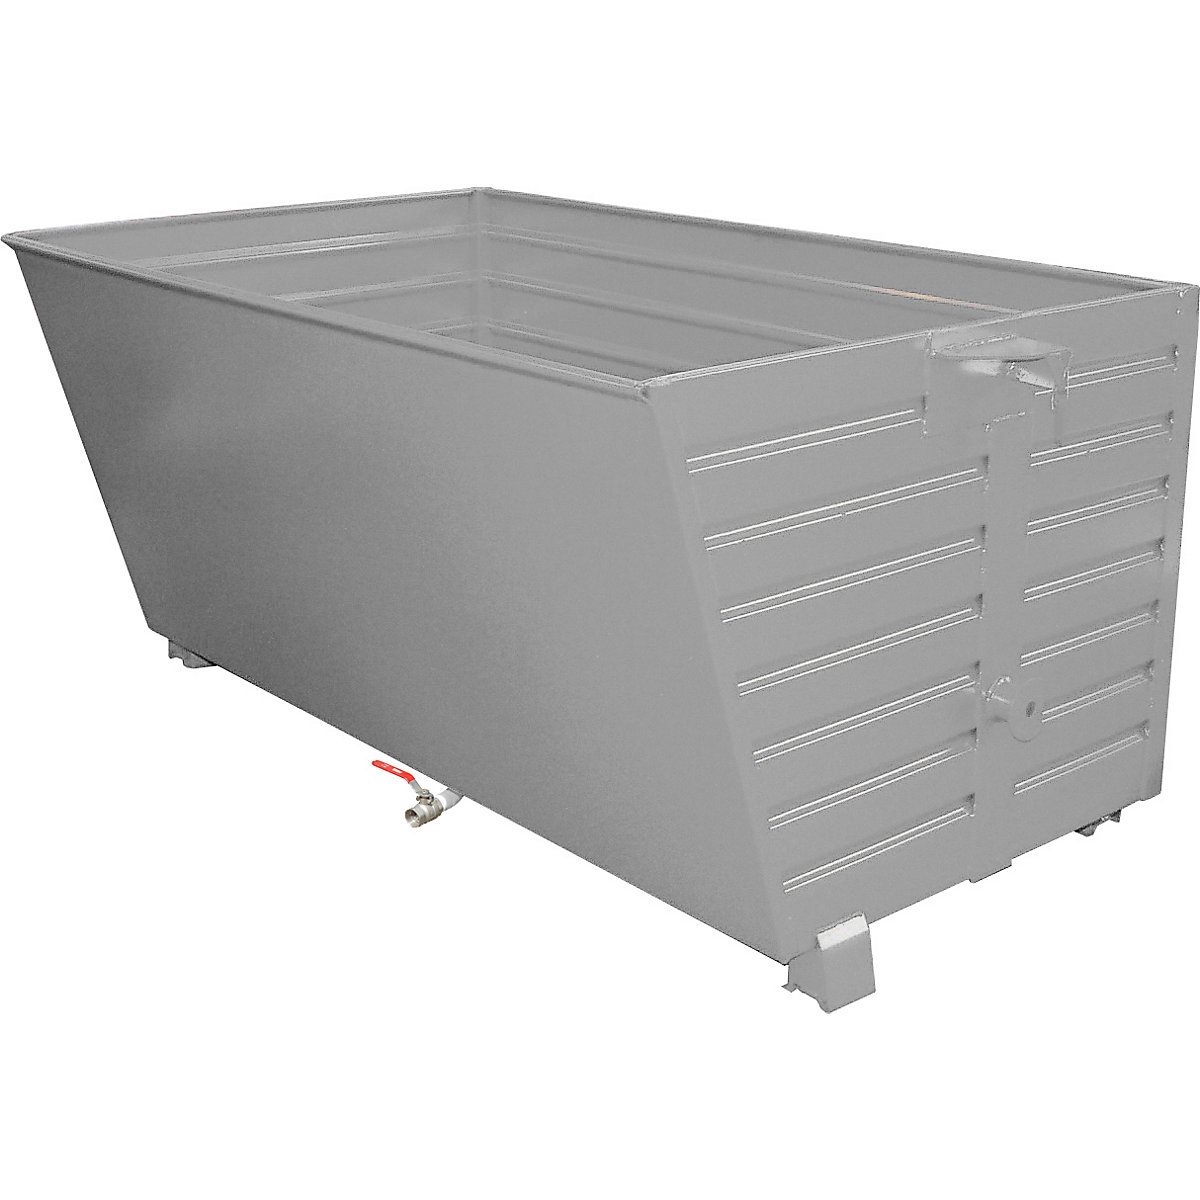 Container basculant și stivuibil pentru șpan BSS – eurokraft pro